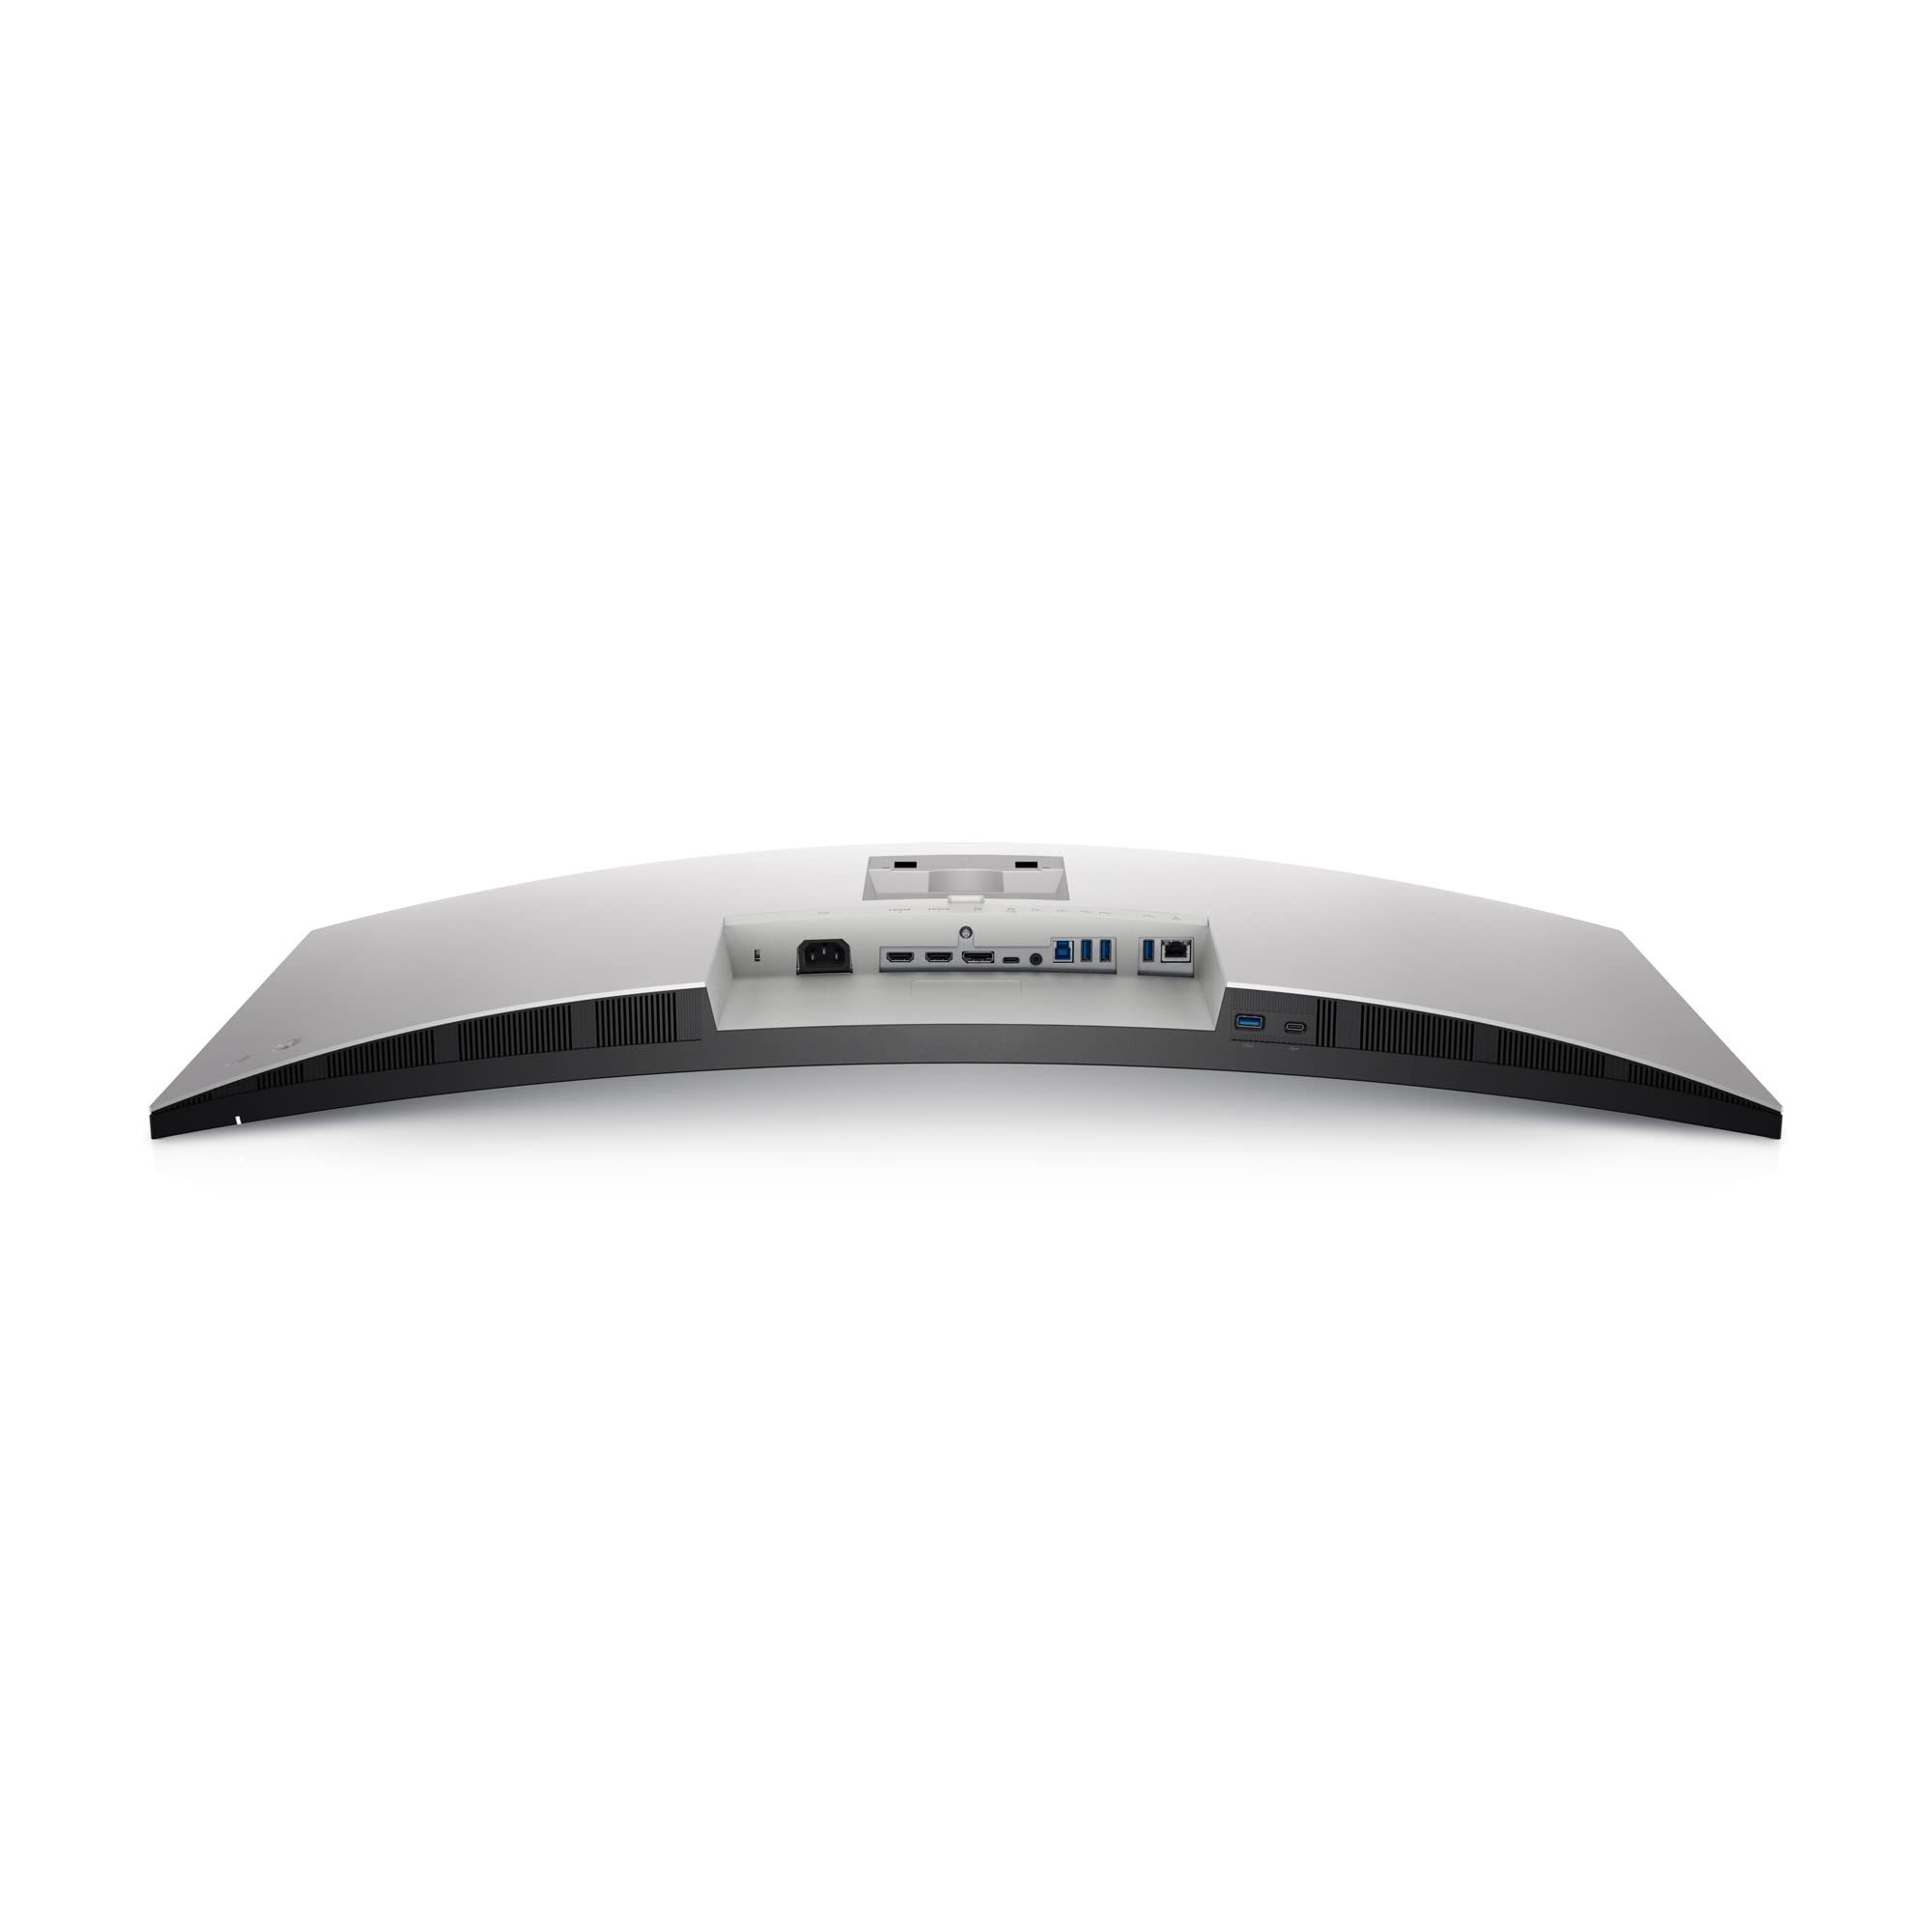 Dell U3821DW UltraSharp Curved USB-C Hub Monitor - 37.52-inch WQHD (3840 x 1600) 60Hz 2300R Curvature Display, 8ms Response time, USB-C/DP/HDMI/RJ-45, Height/Slant/Tilt/Swivel Adjustability - Silver